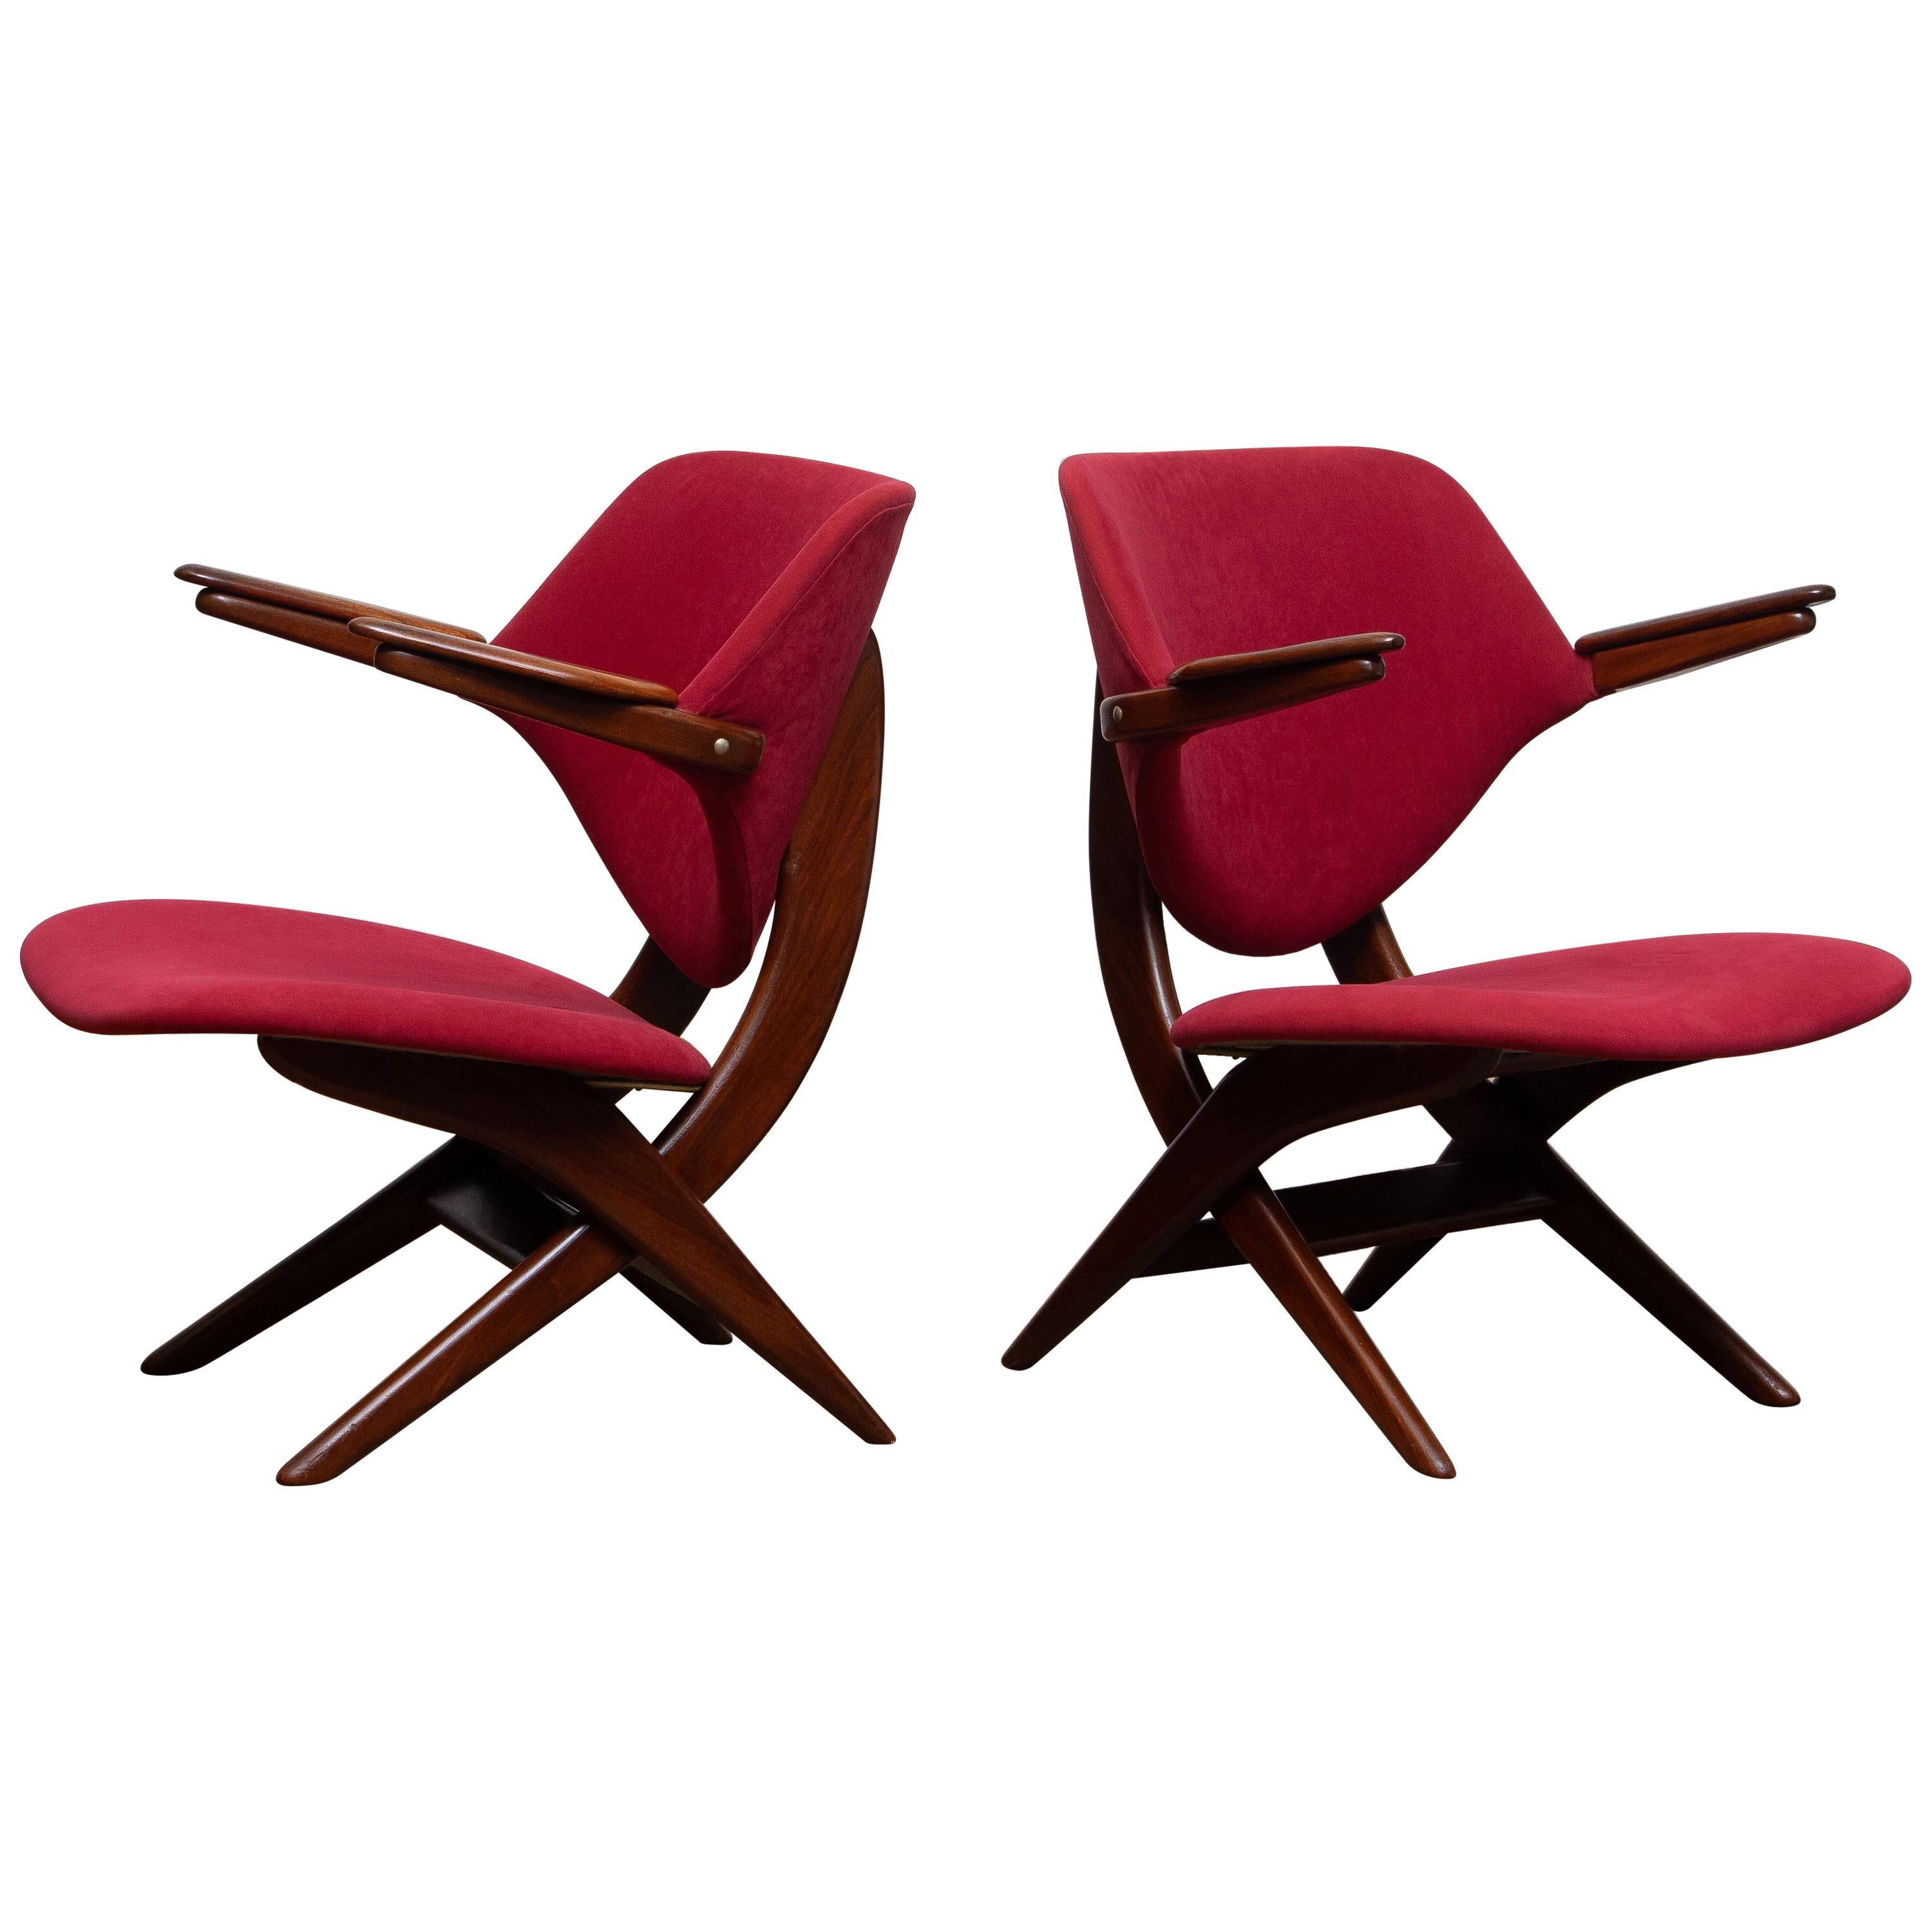 1950s, Set of Two Teak Lounge/Easy Chairs by Louis Van Teeffelen for Wébé 5